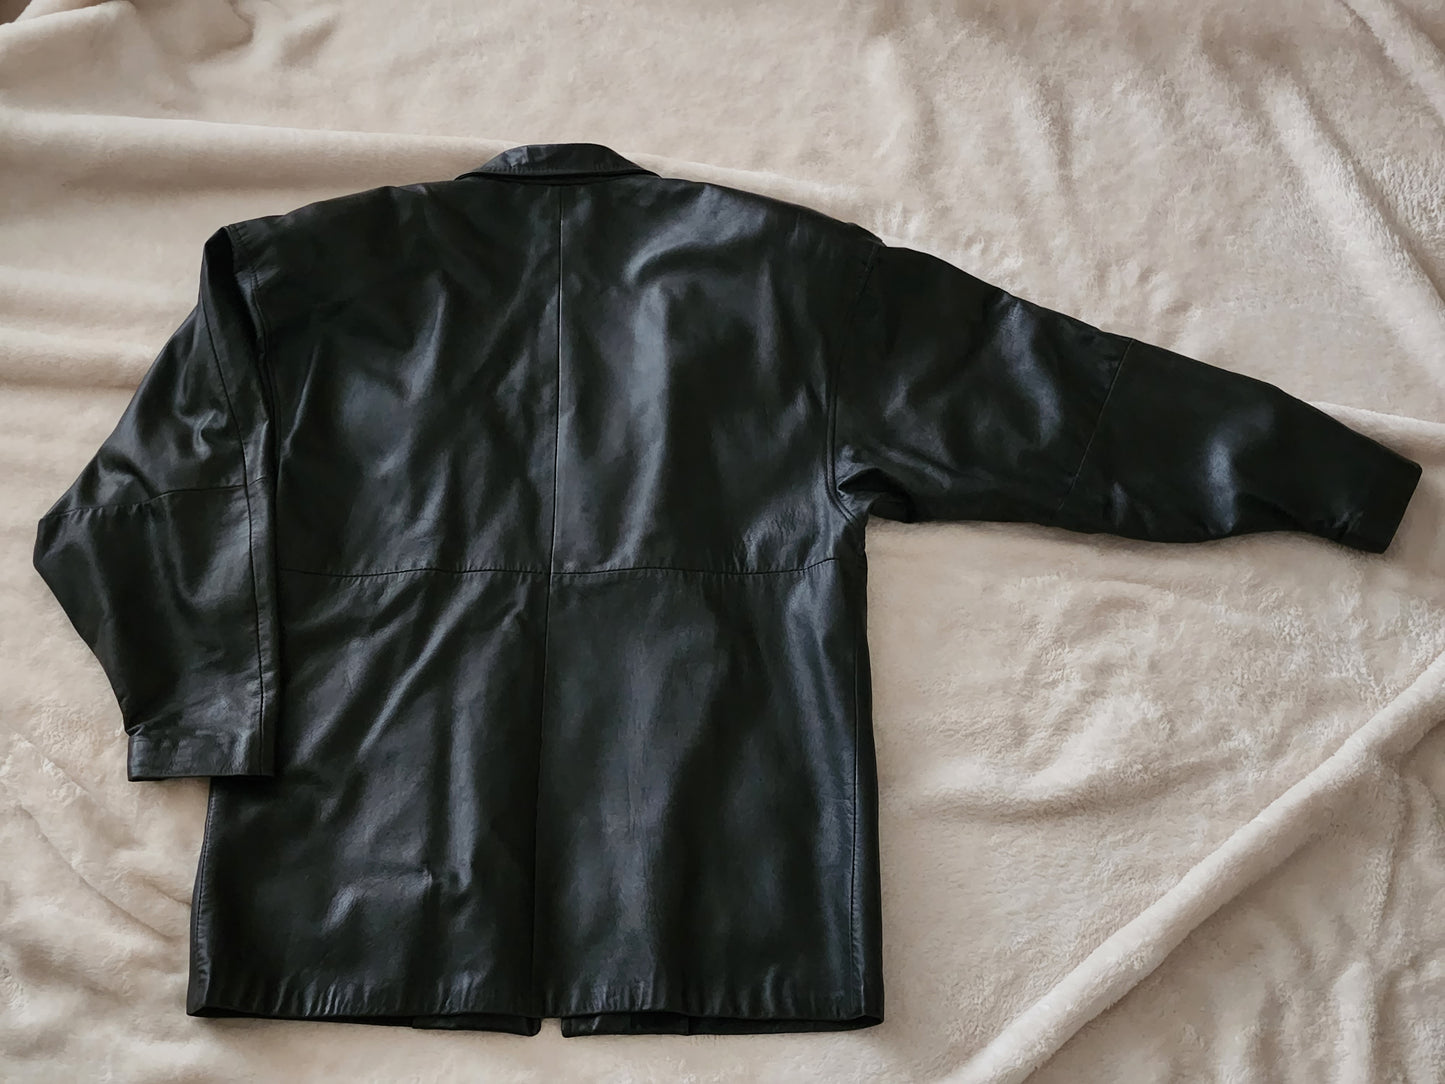 90's Vintage Leather Jacket